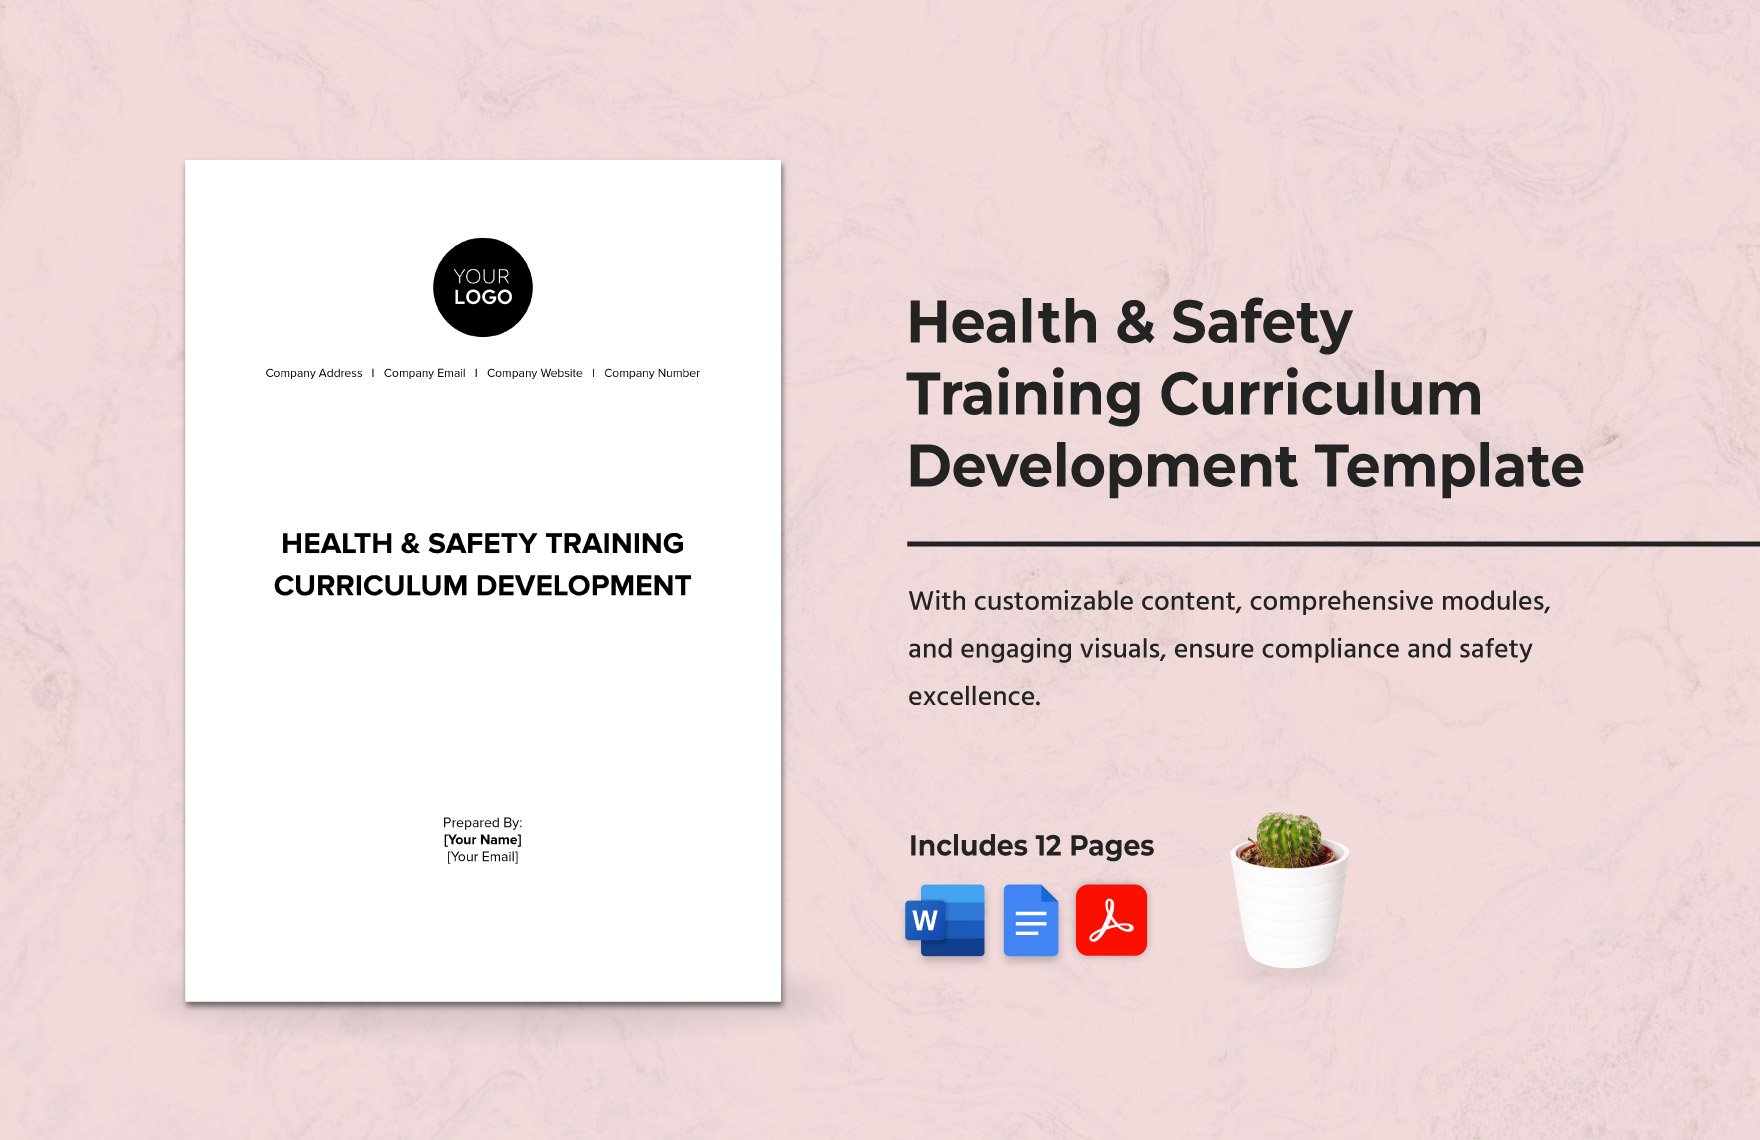 Health & Safety Training Curriculum Development Template